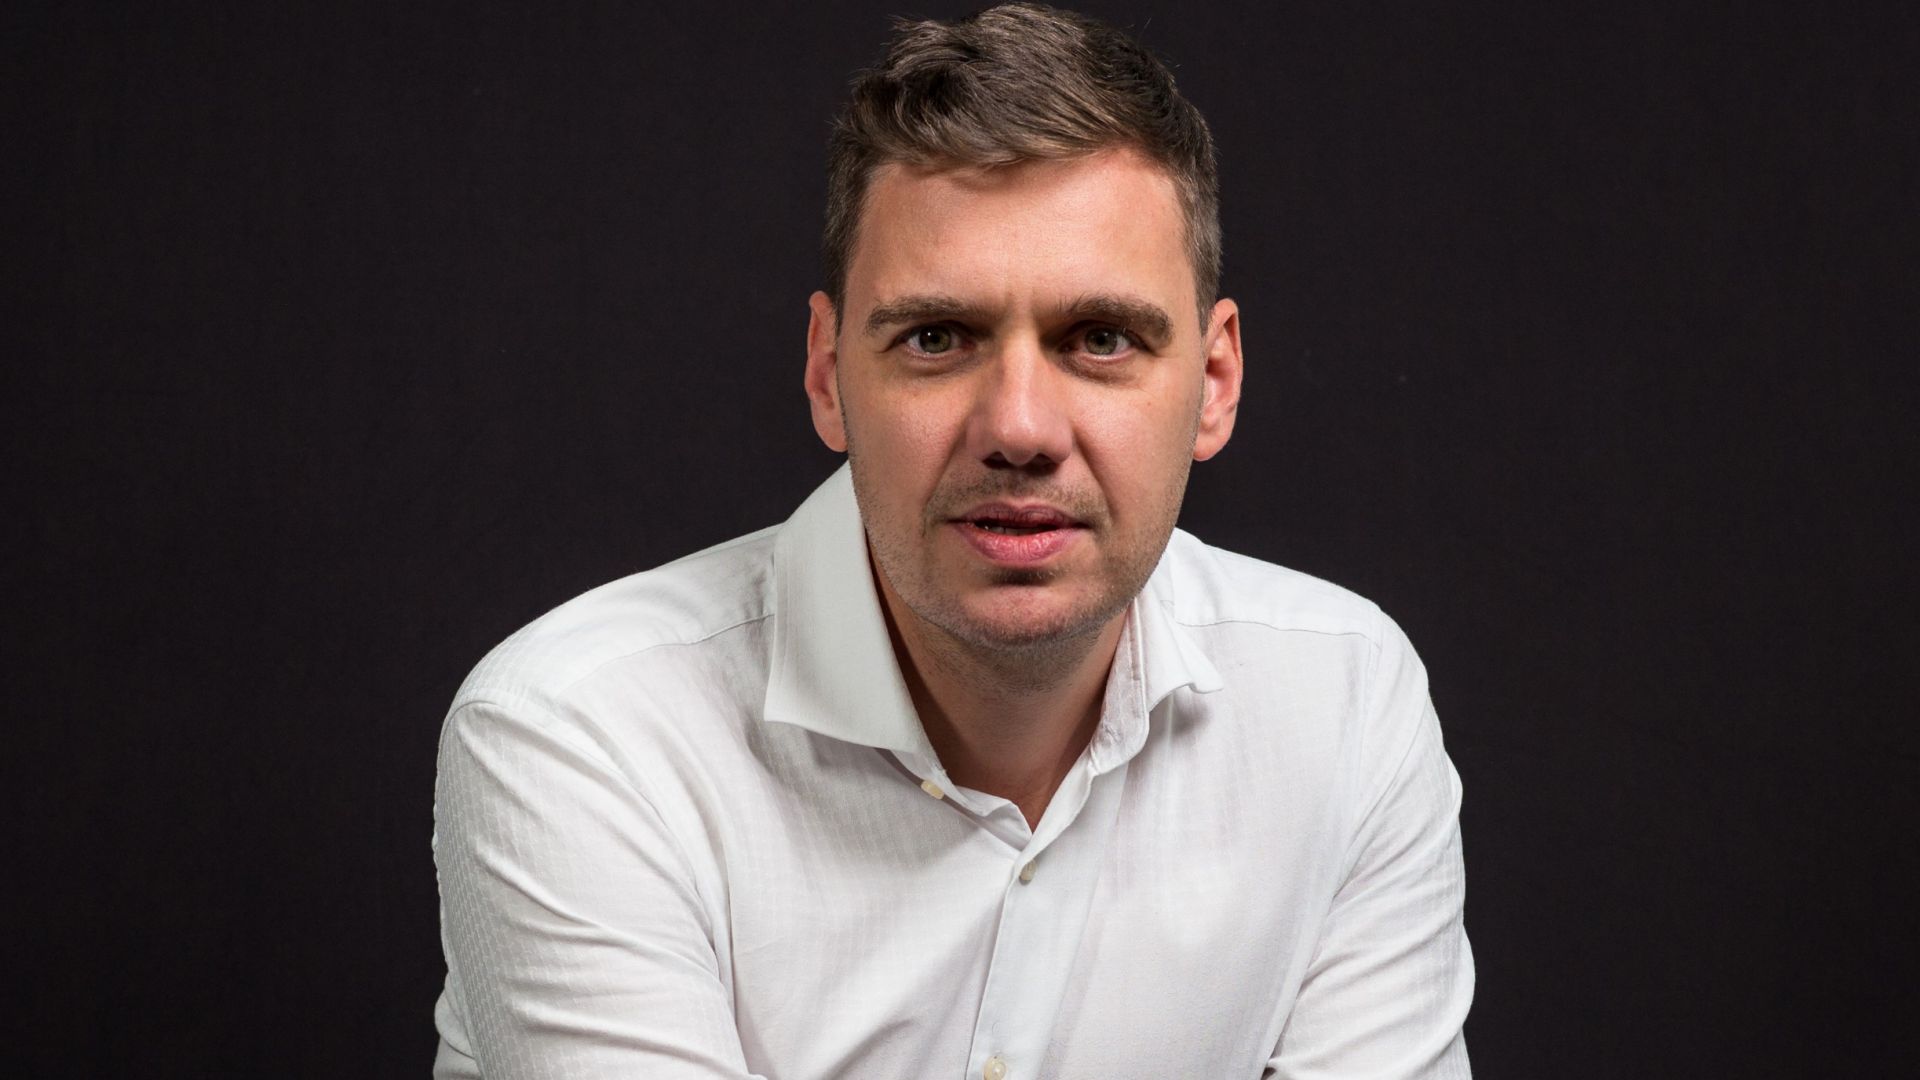 Христо Христов е новият главен изпълнителен директор на "Дарик радио"